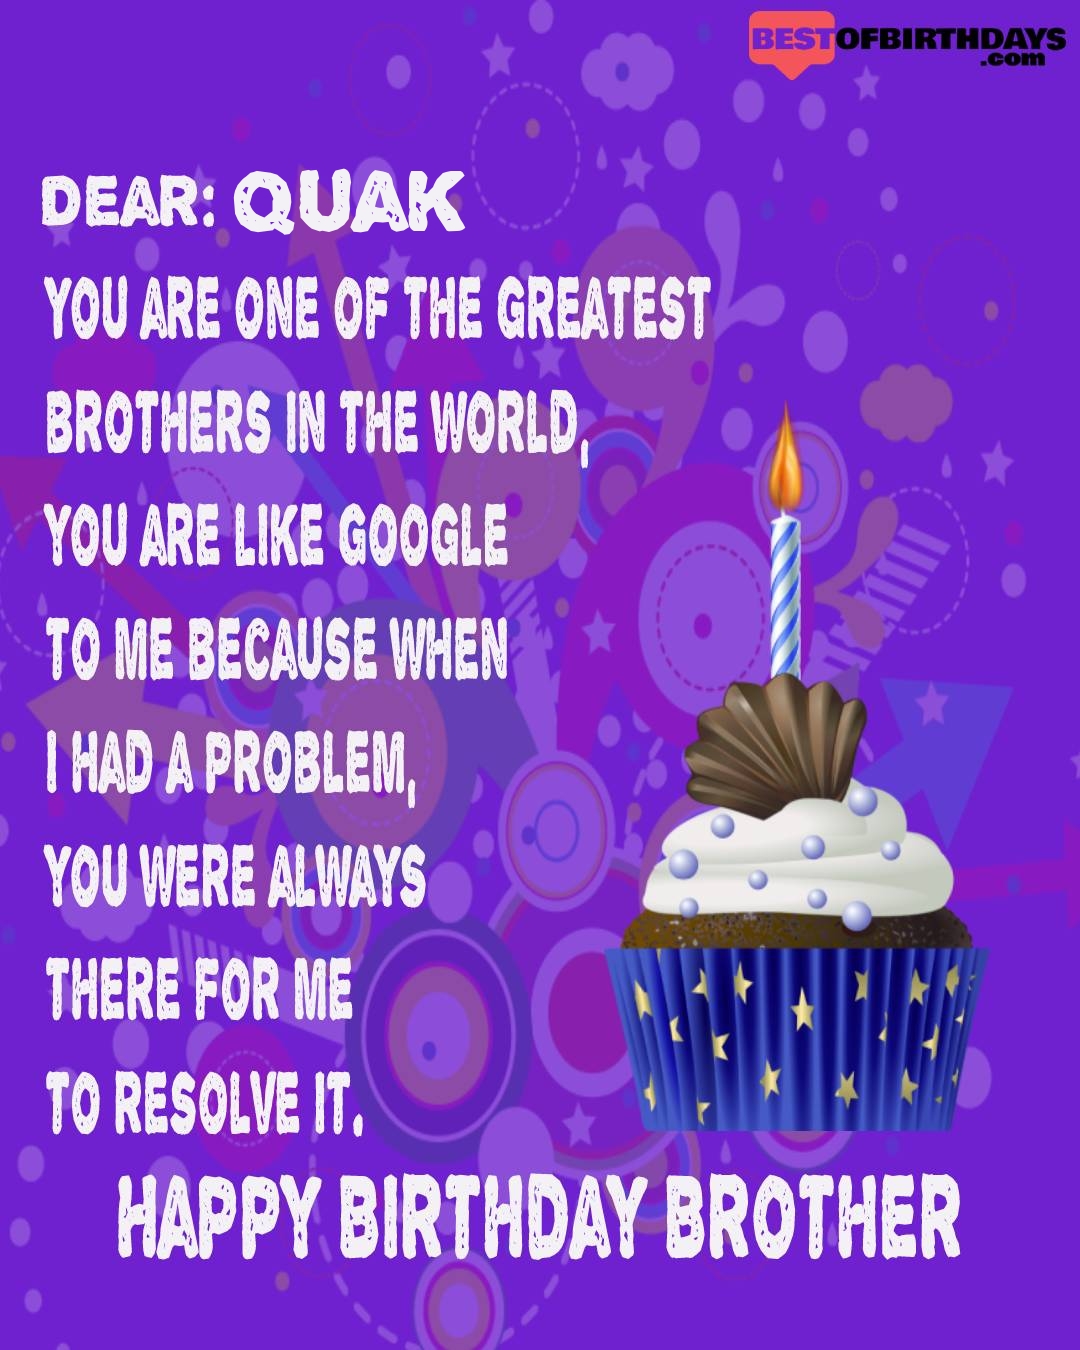 Happy birthday quak bhai brother bro